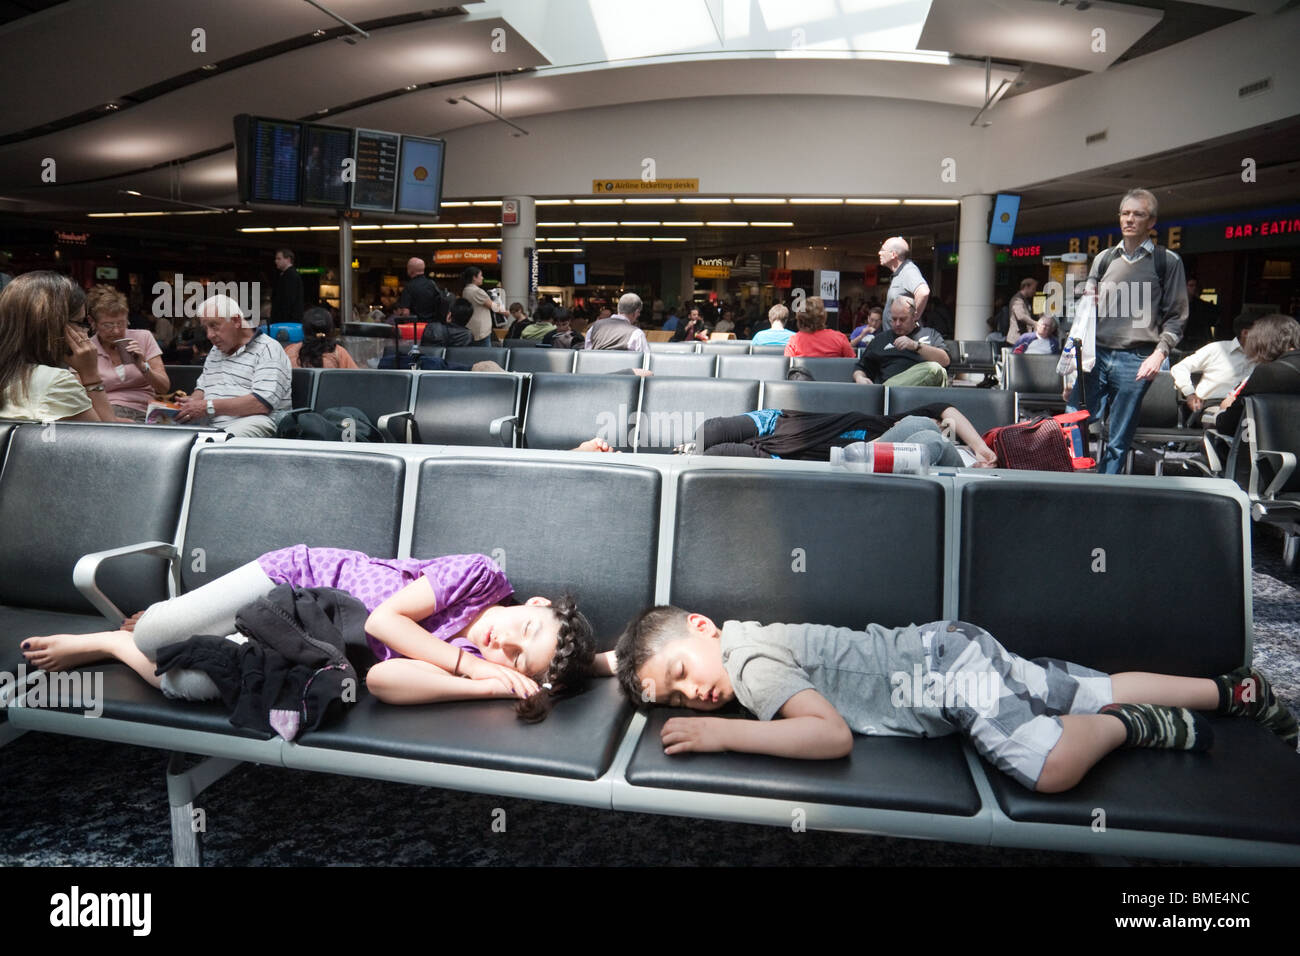 Children asleep in departures due to flight delay delayed Terminal 3, Heathrow airport, London UK Stock Photo